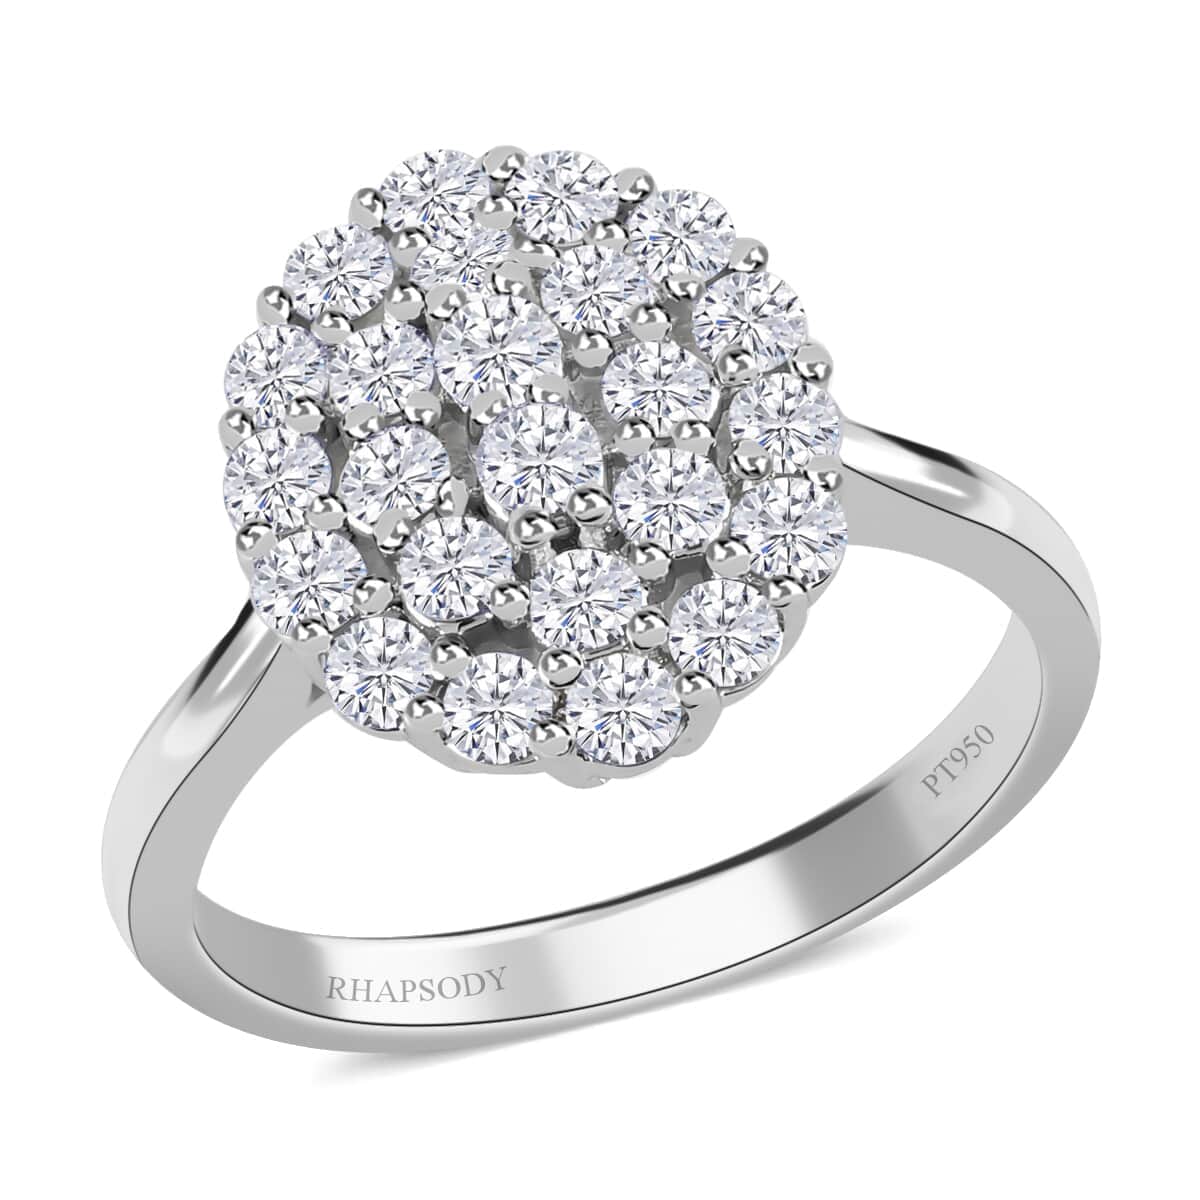 Rhapsody IGI Certified 950 Platinum Diamond E-F VS2 Ring (Size 7.0) 6.85 Grams 0.85 ctw  image number 0